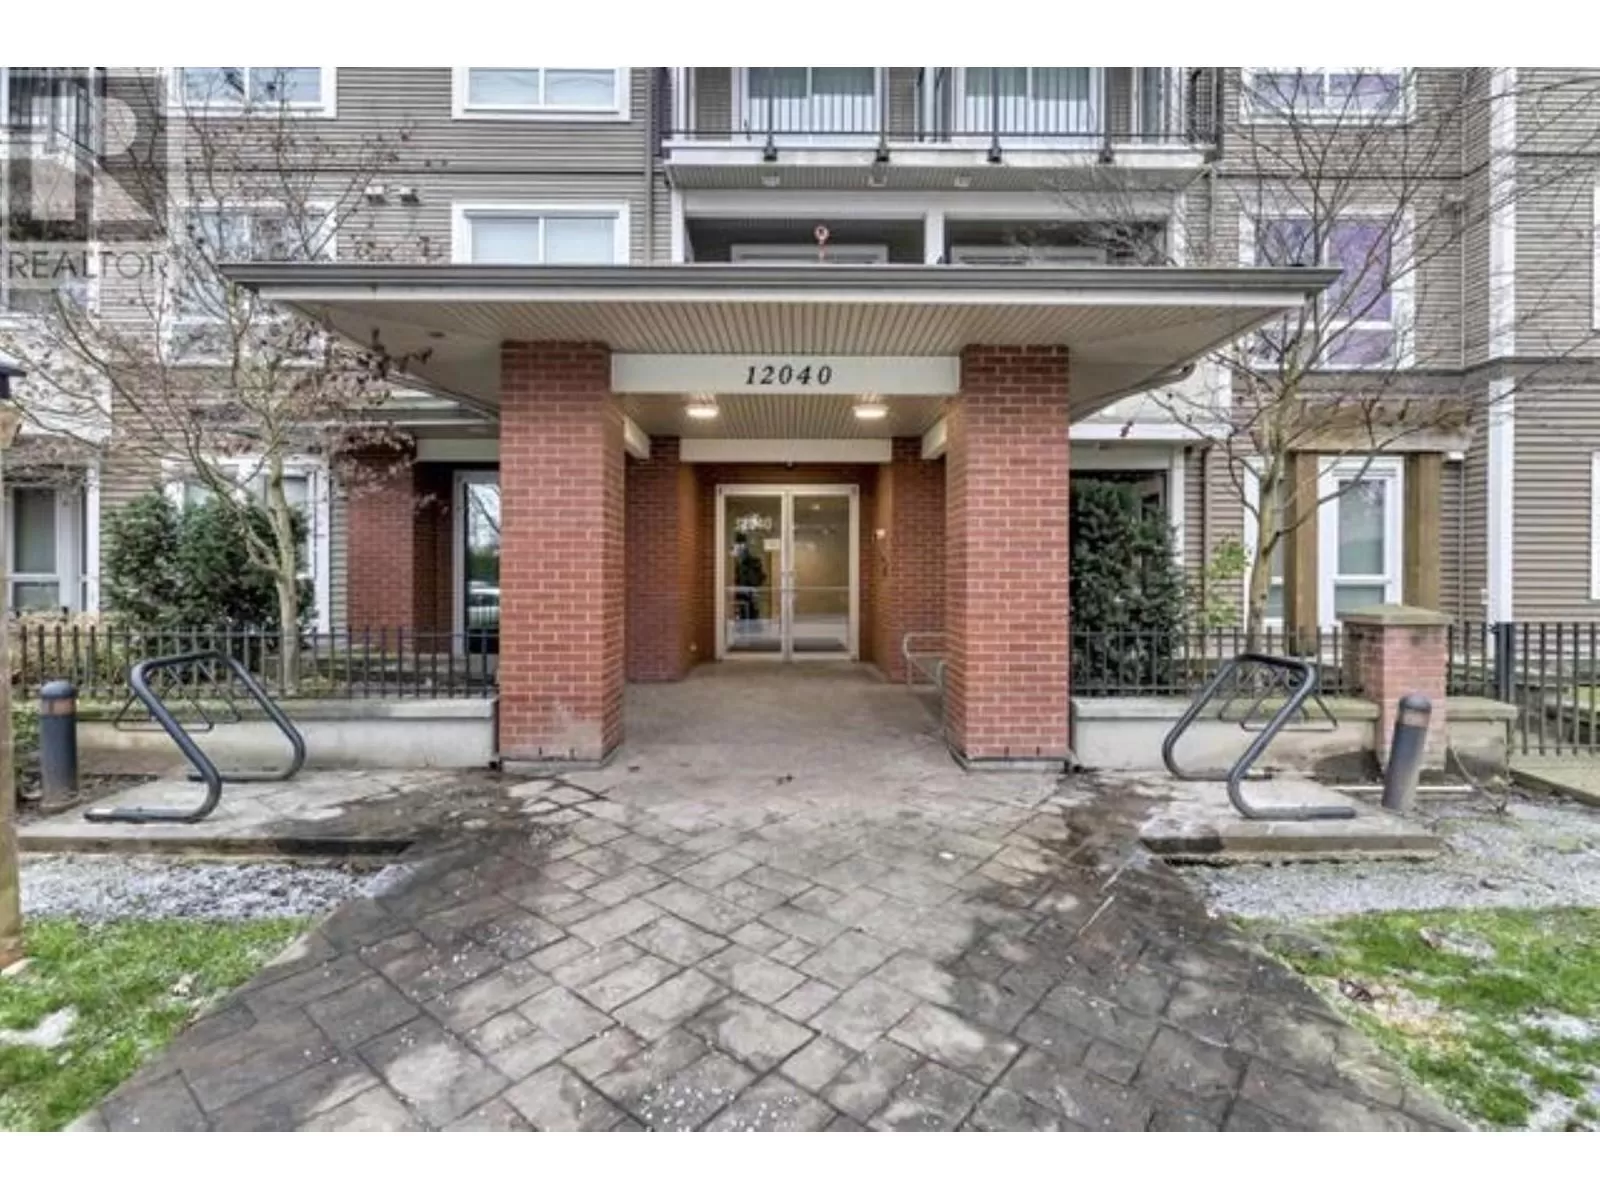 Apartment for rent: 405 12040 222 Street, Maple Ridge, British Columbia V2X 5W1